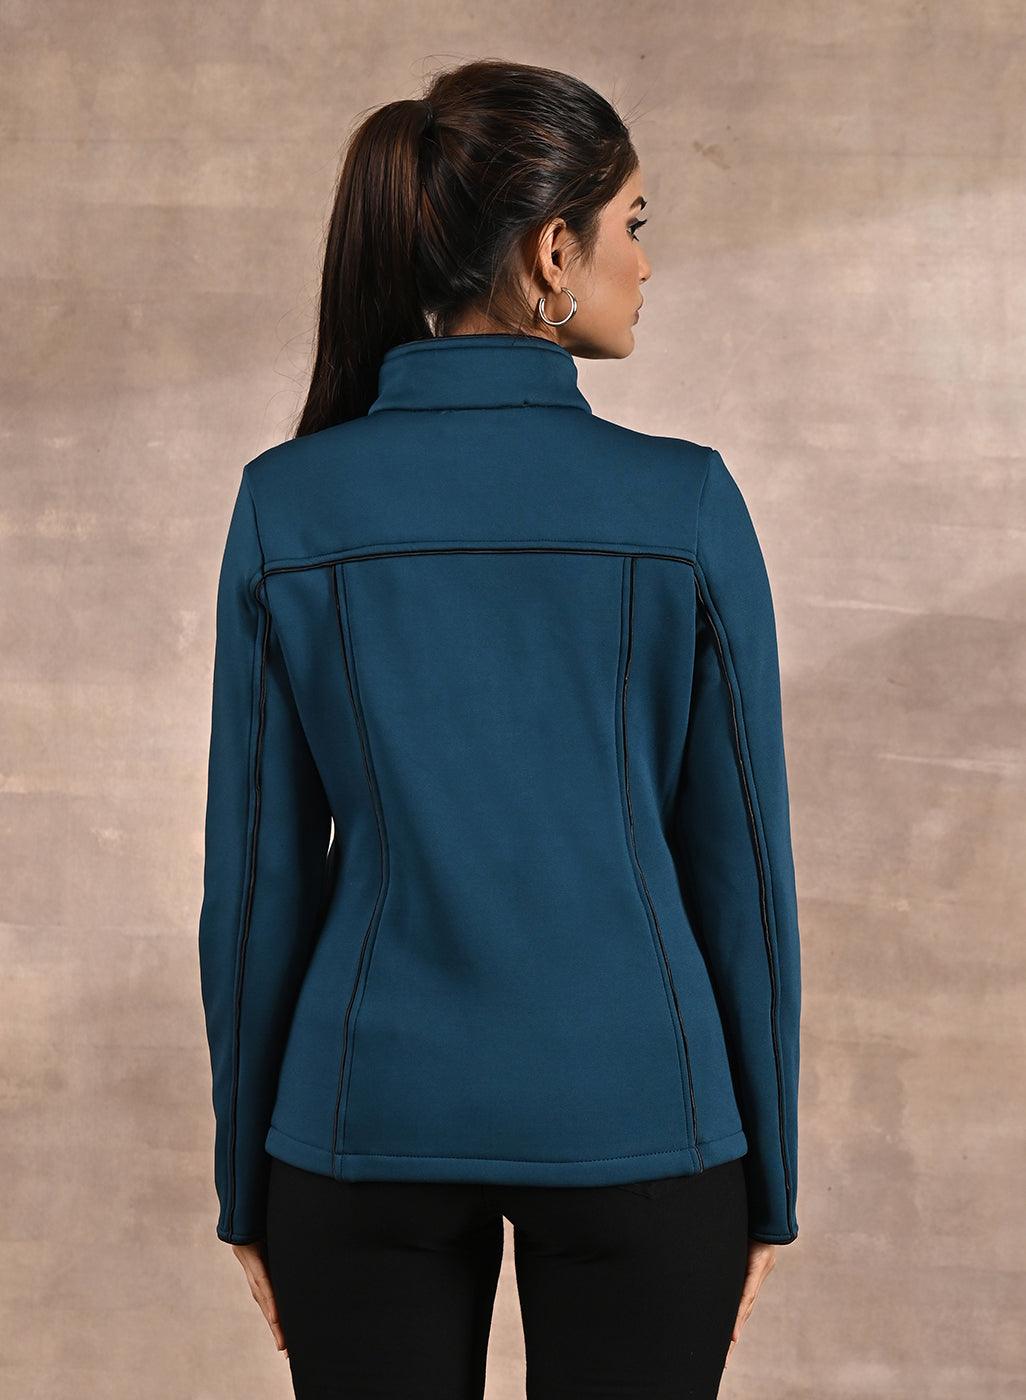 Teal Fleece Jacket with Decorative Stitch on Front - Lakshita